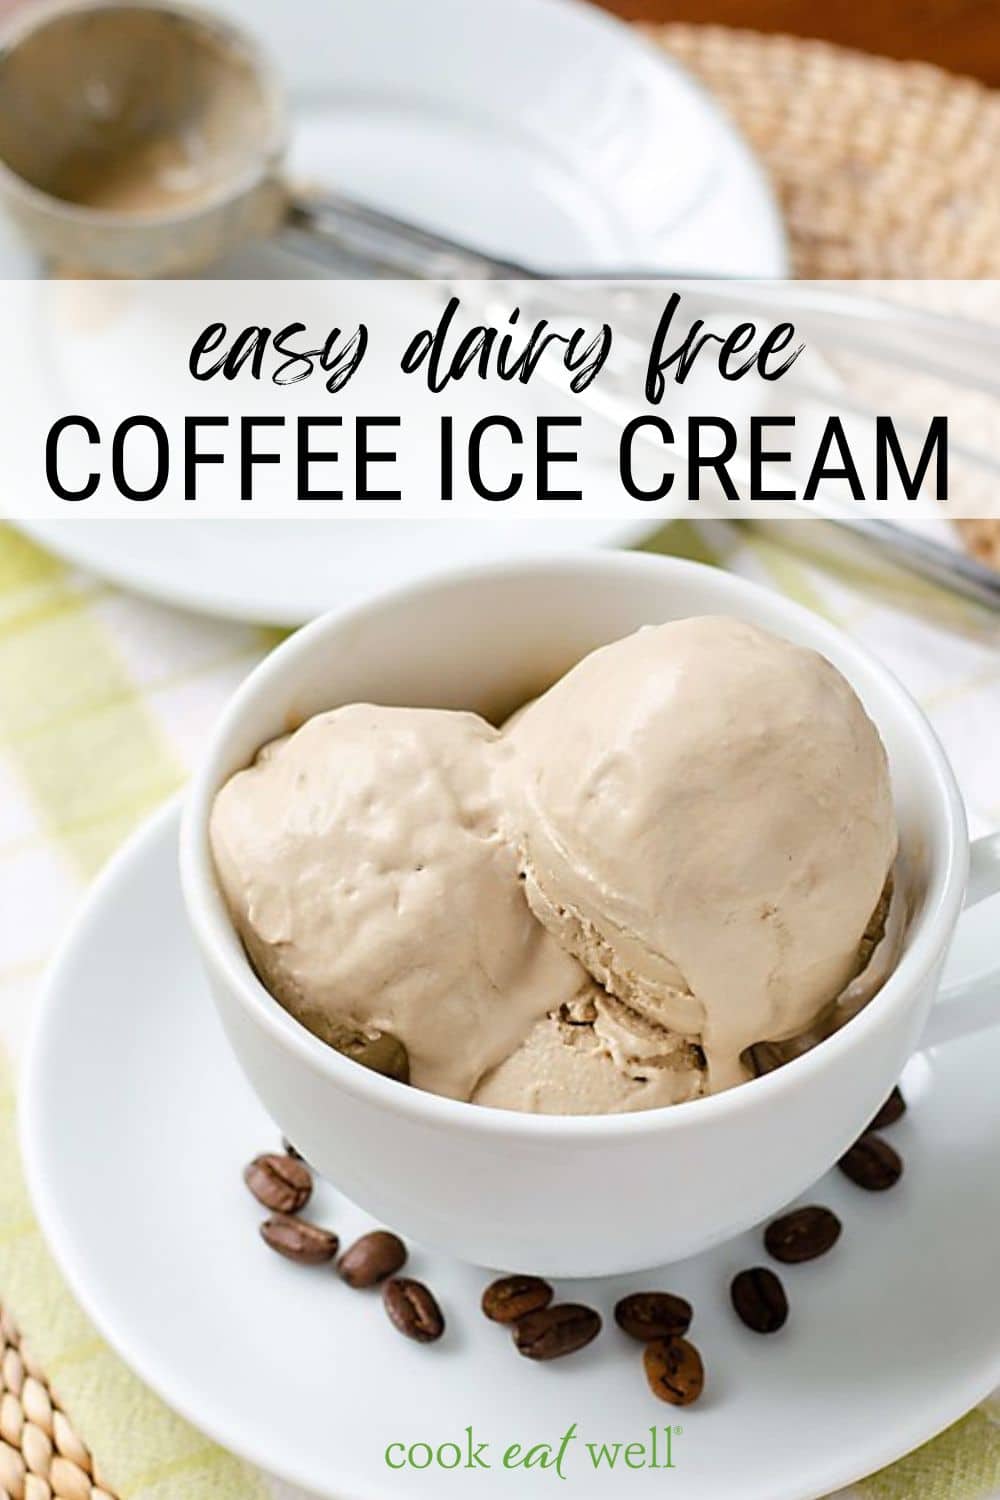 https://cookeatpaleo.com/wp-content/uploads/2021/05/coffee-ice-cream-easy-dairy-free-cook-eat-well.jpg